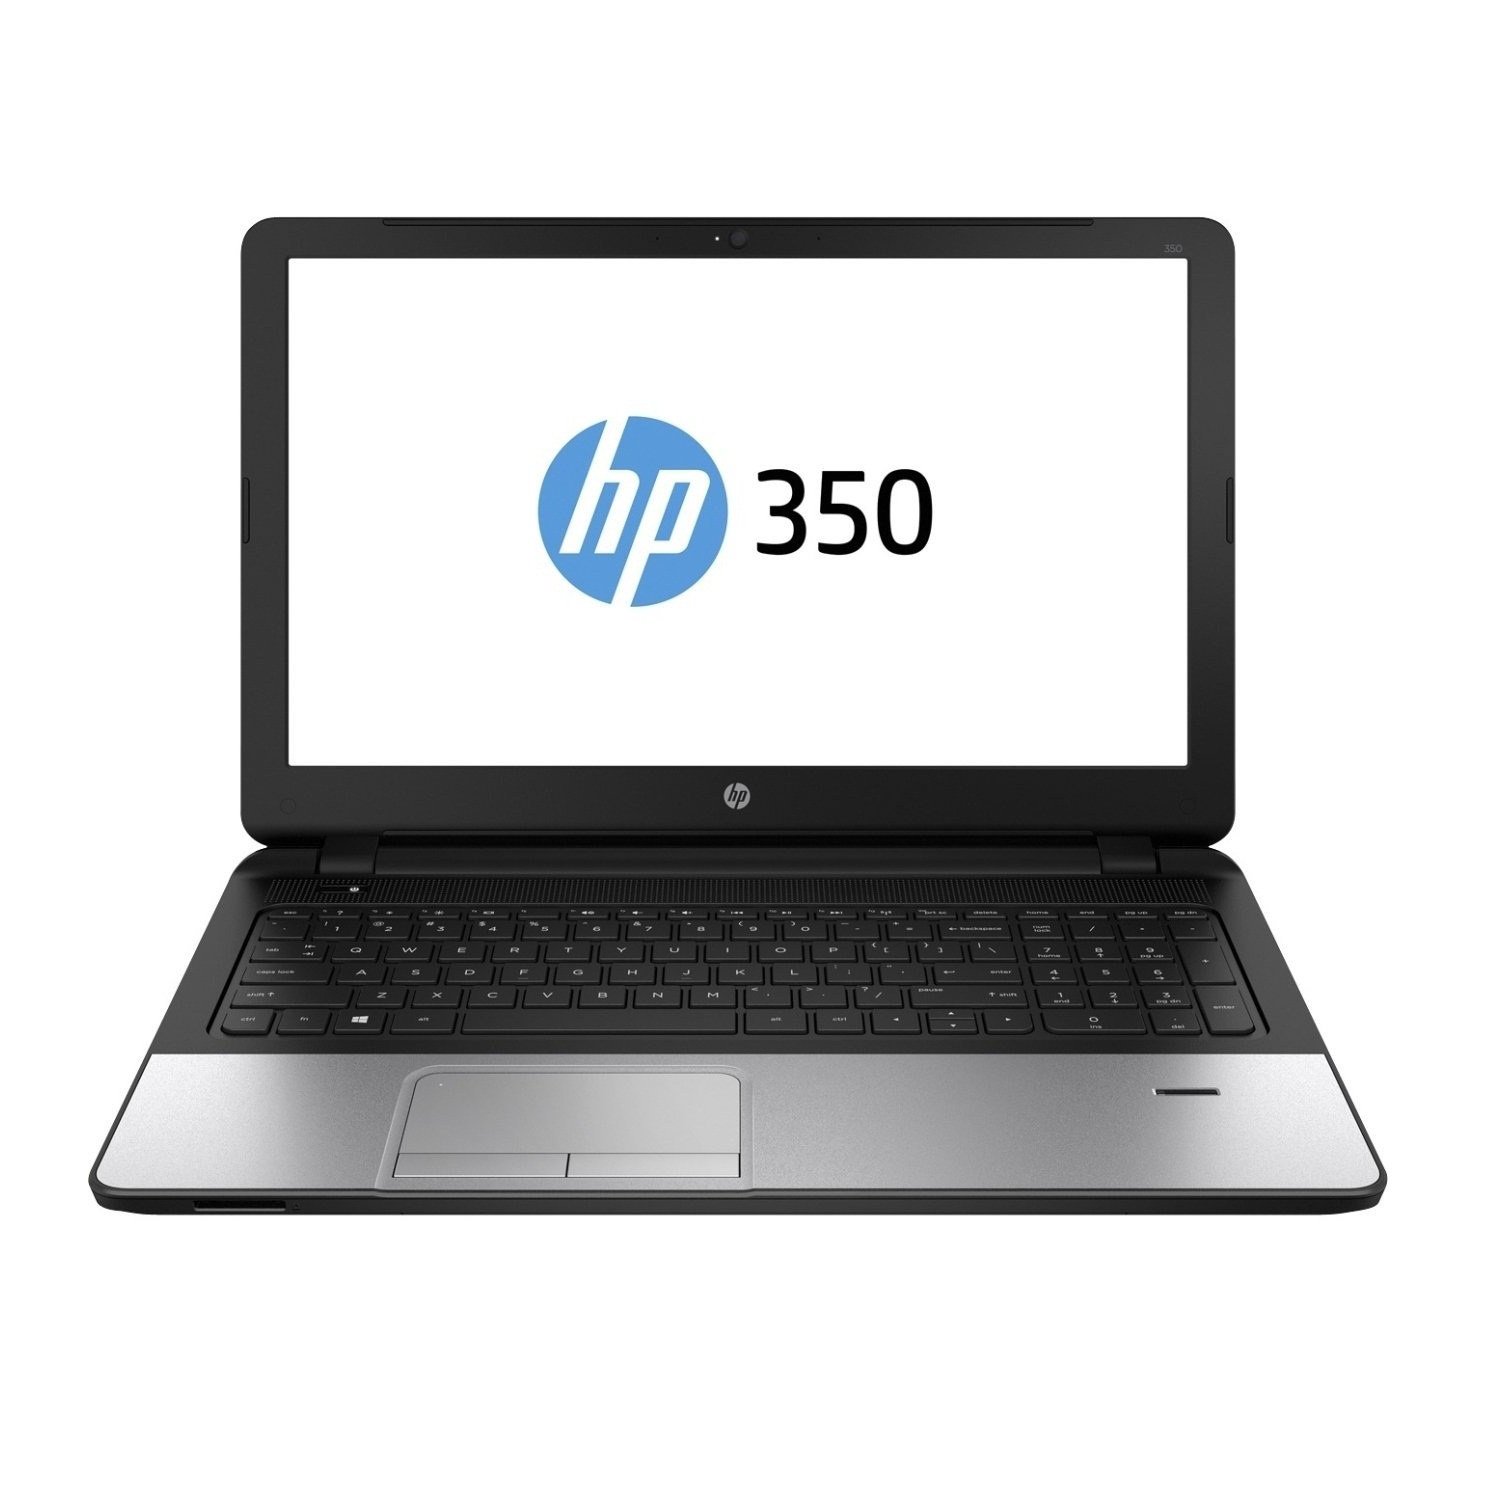 HP 350/Core i3-4005U (White)